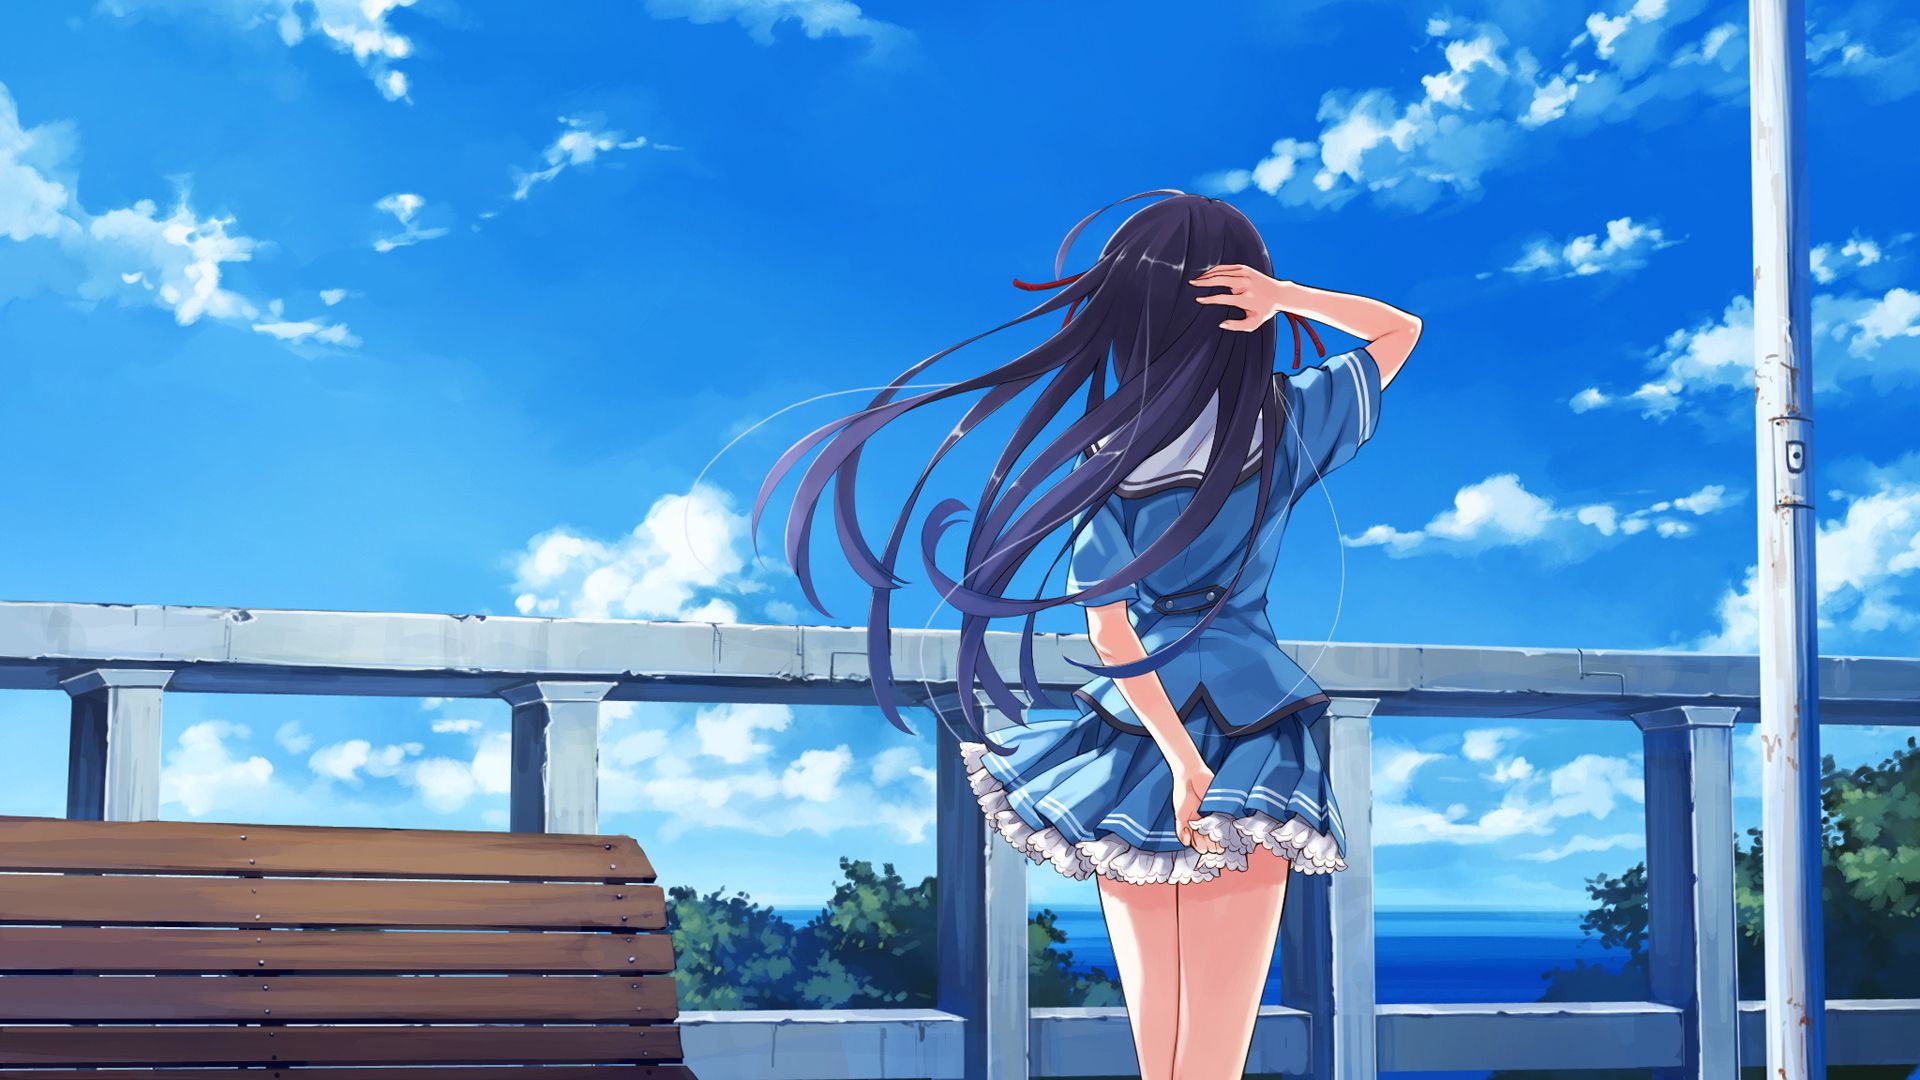 Amazing Anime Summer Scenery Wallpaper Image